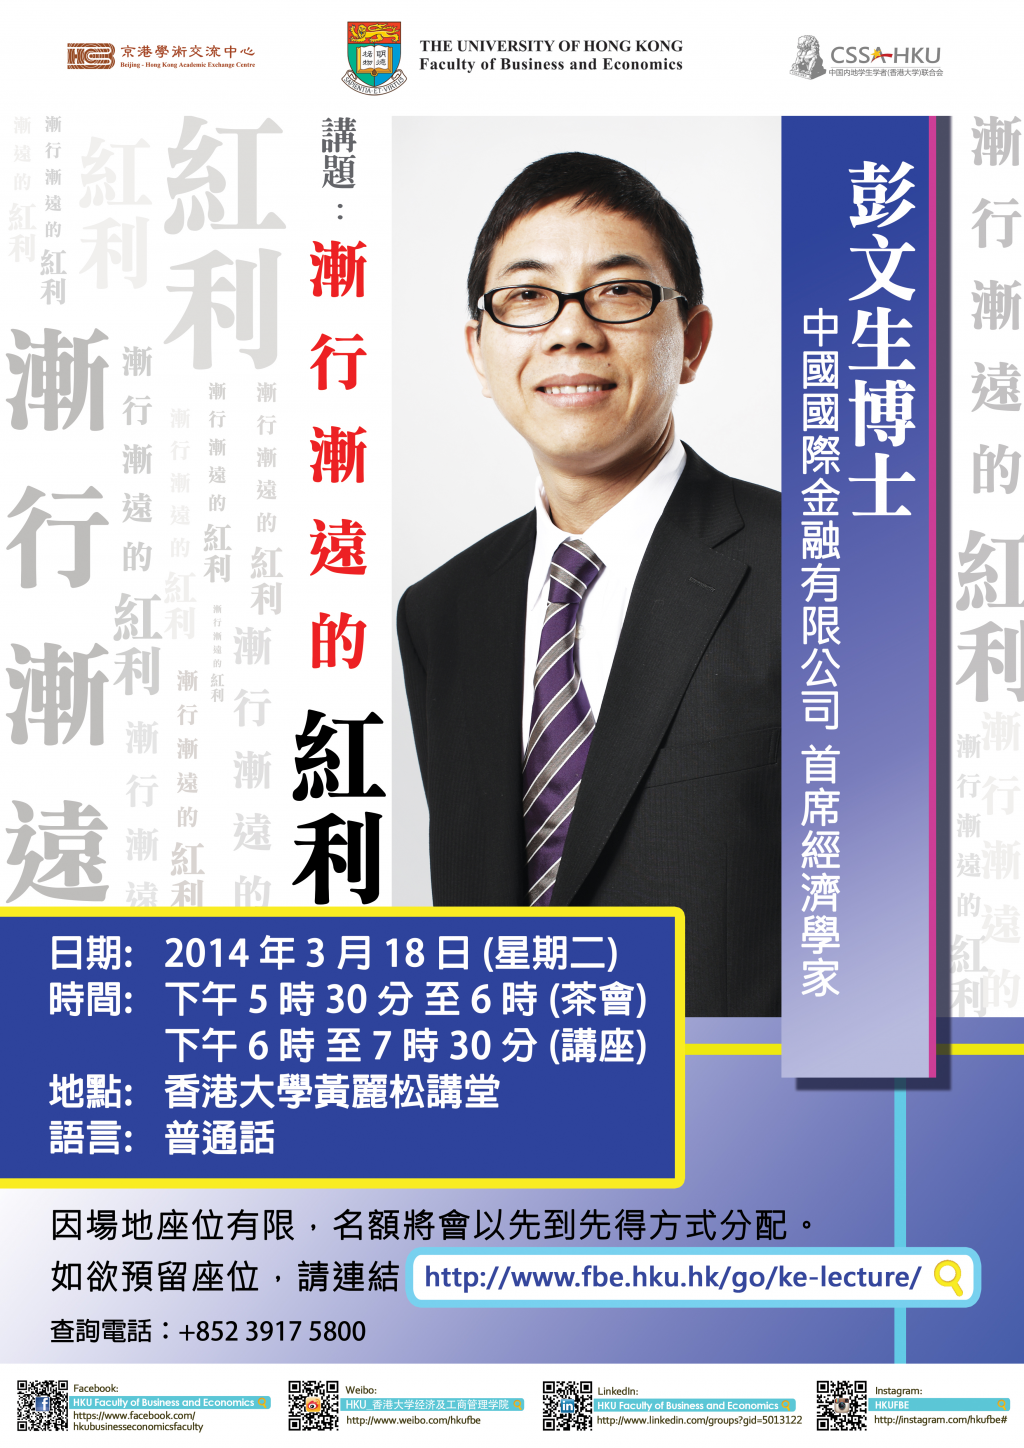 KE Lecture by Dr. Peng Wensheng (China International Capital Corporation Chief Economist)